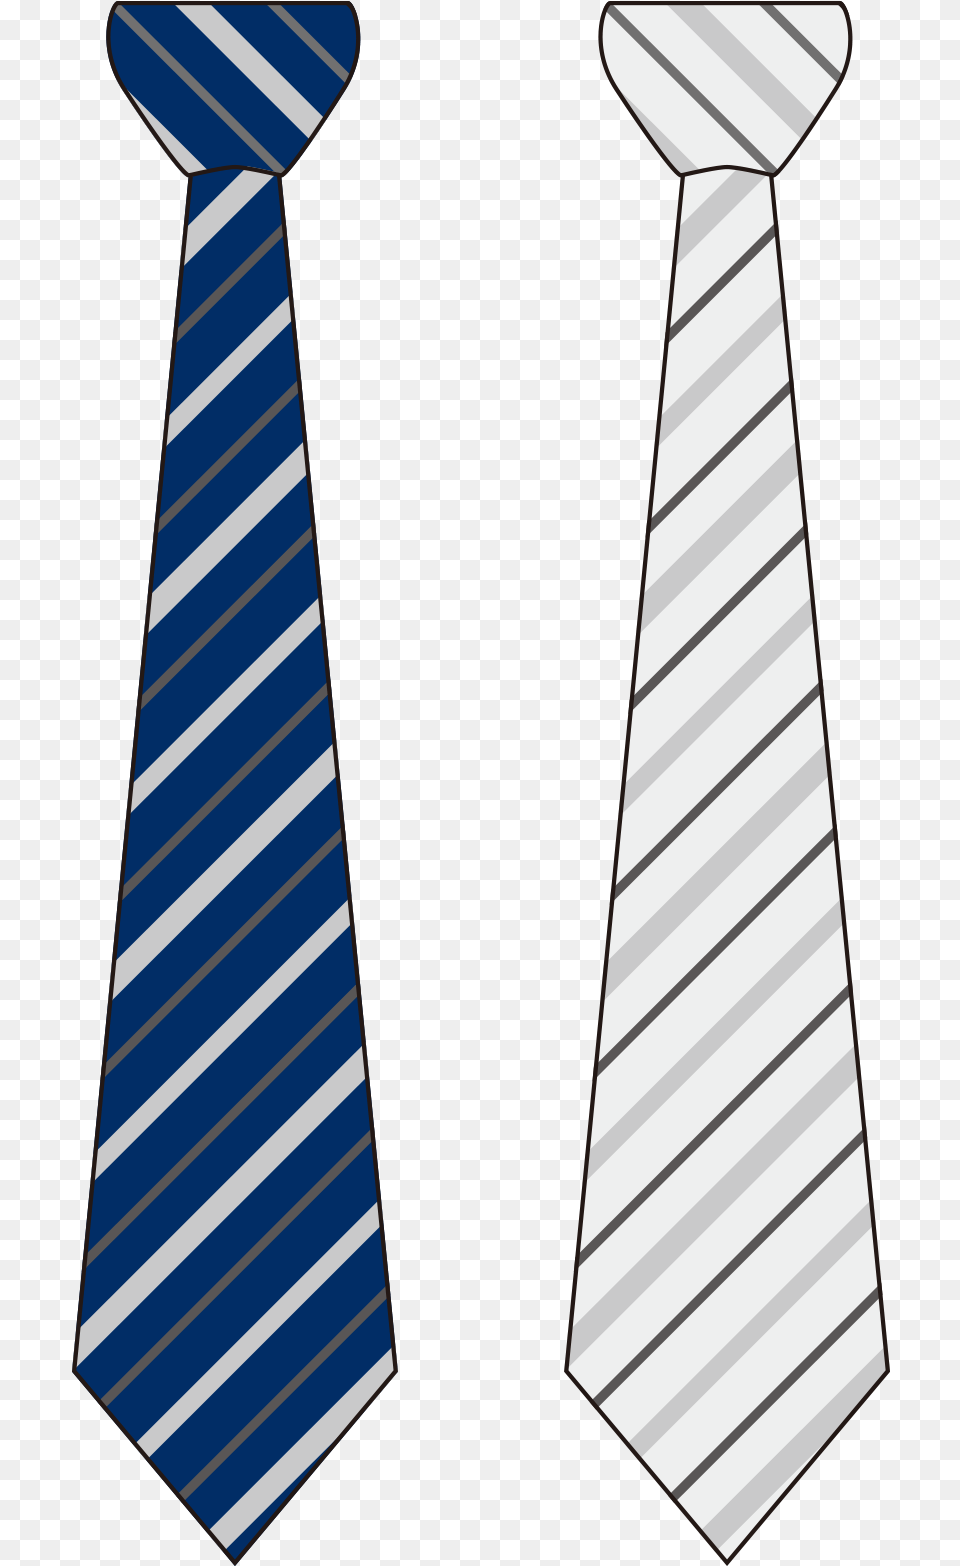 Neck Tie Necktie Businessperson Textile Business Tie Vector, Accessories, Formal Wear Png